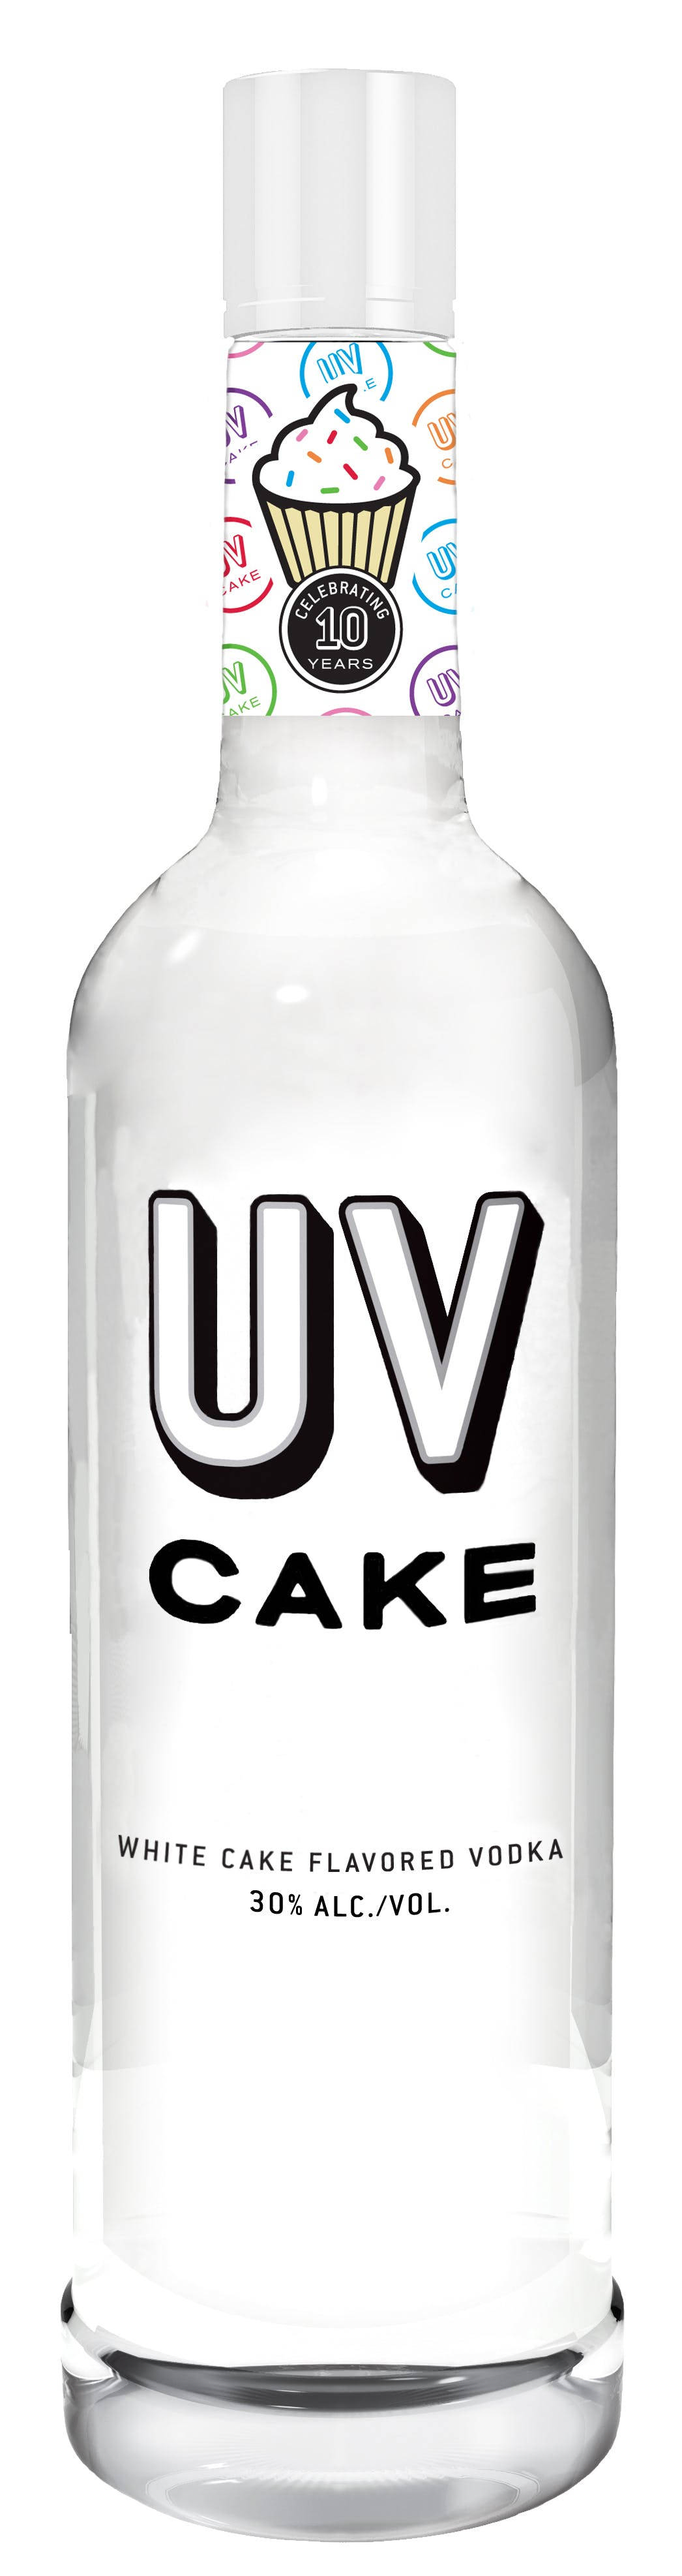 Uv Vodka Cake Wallpaper